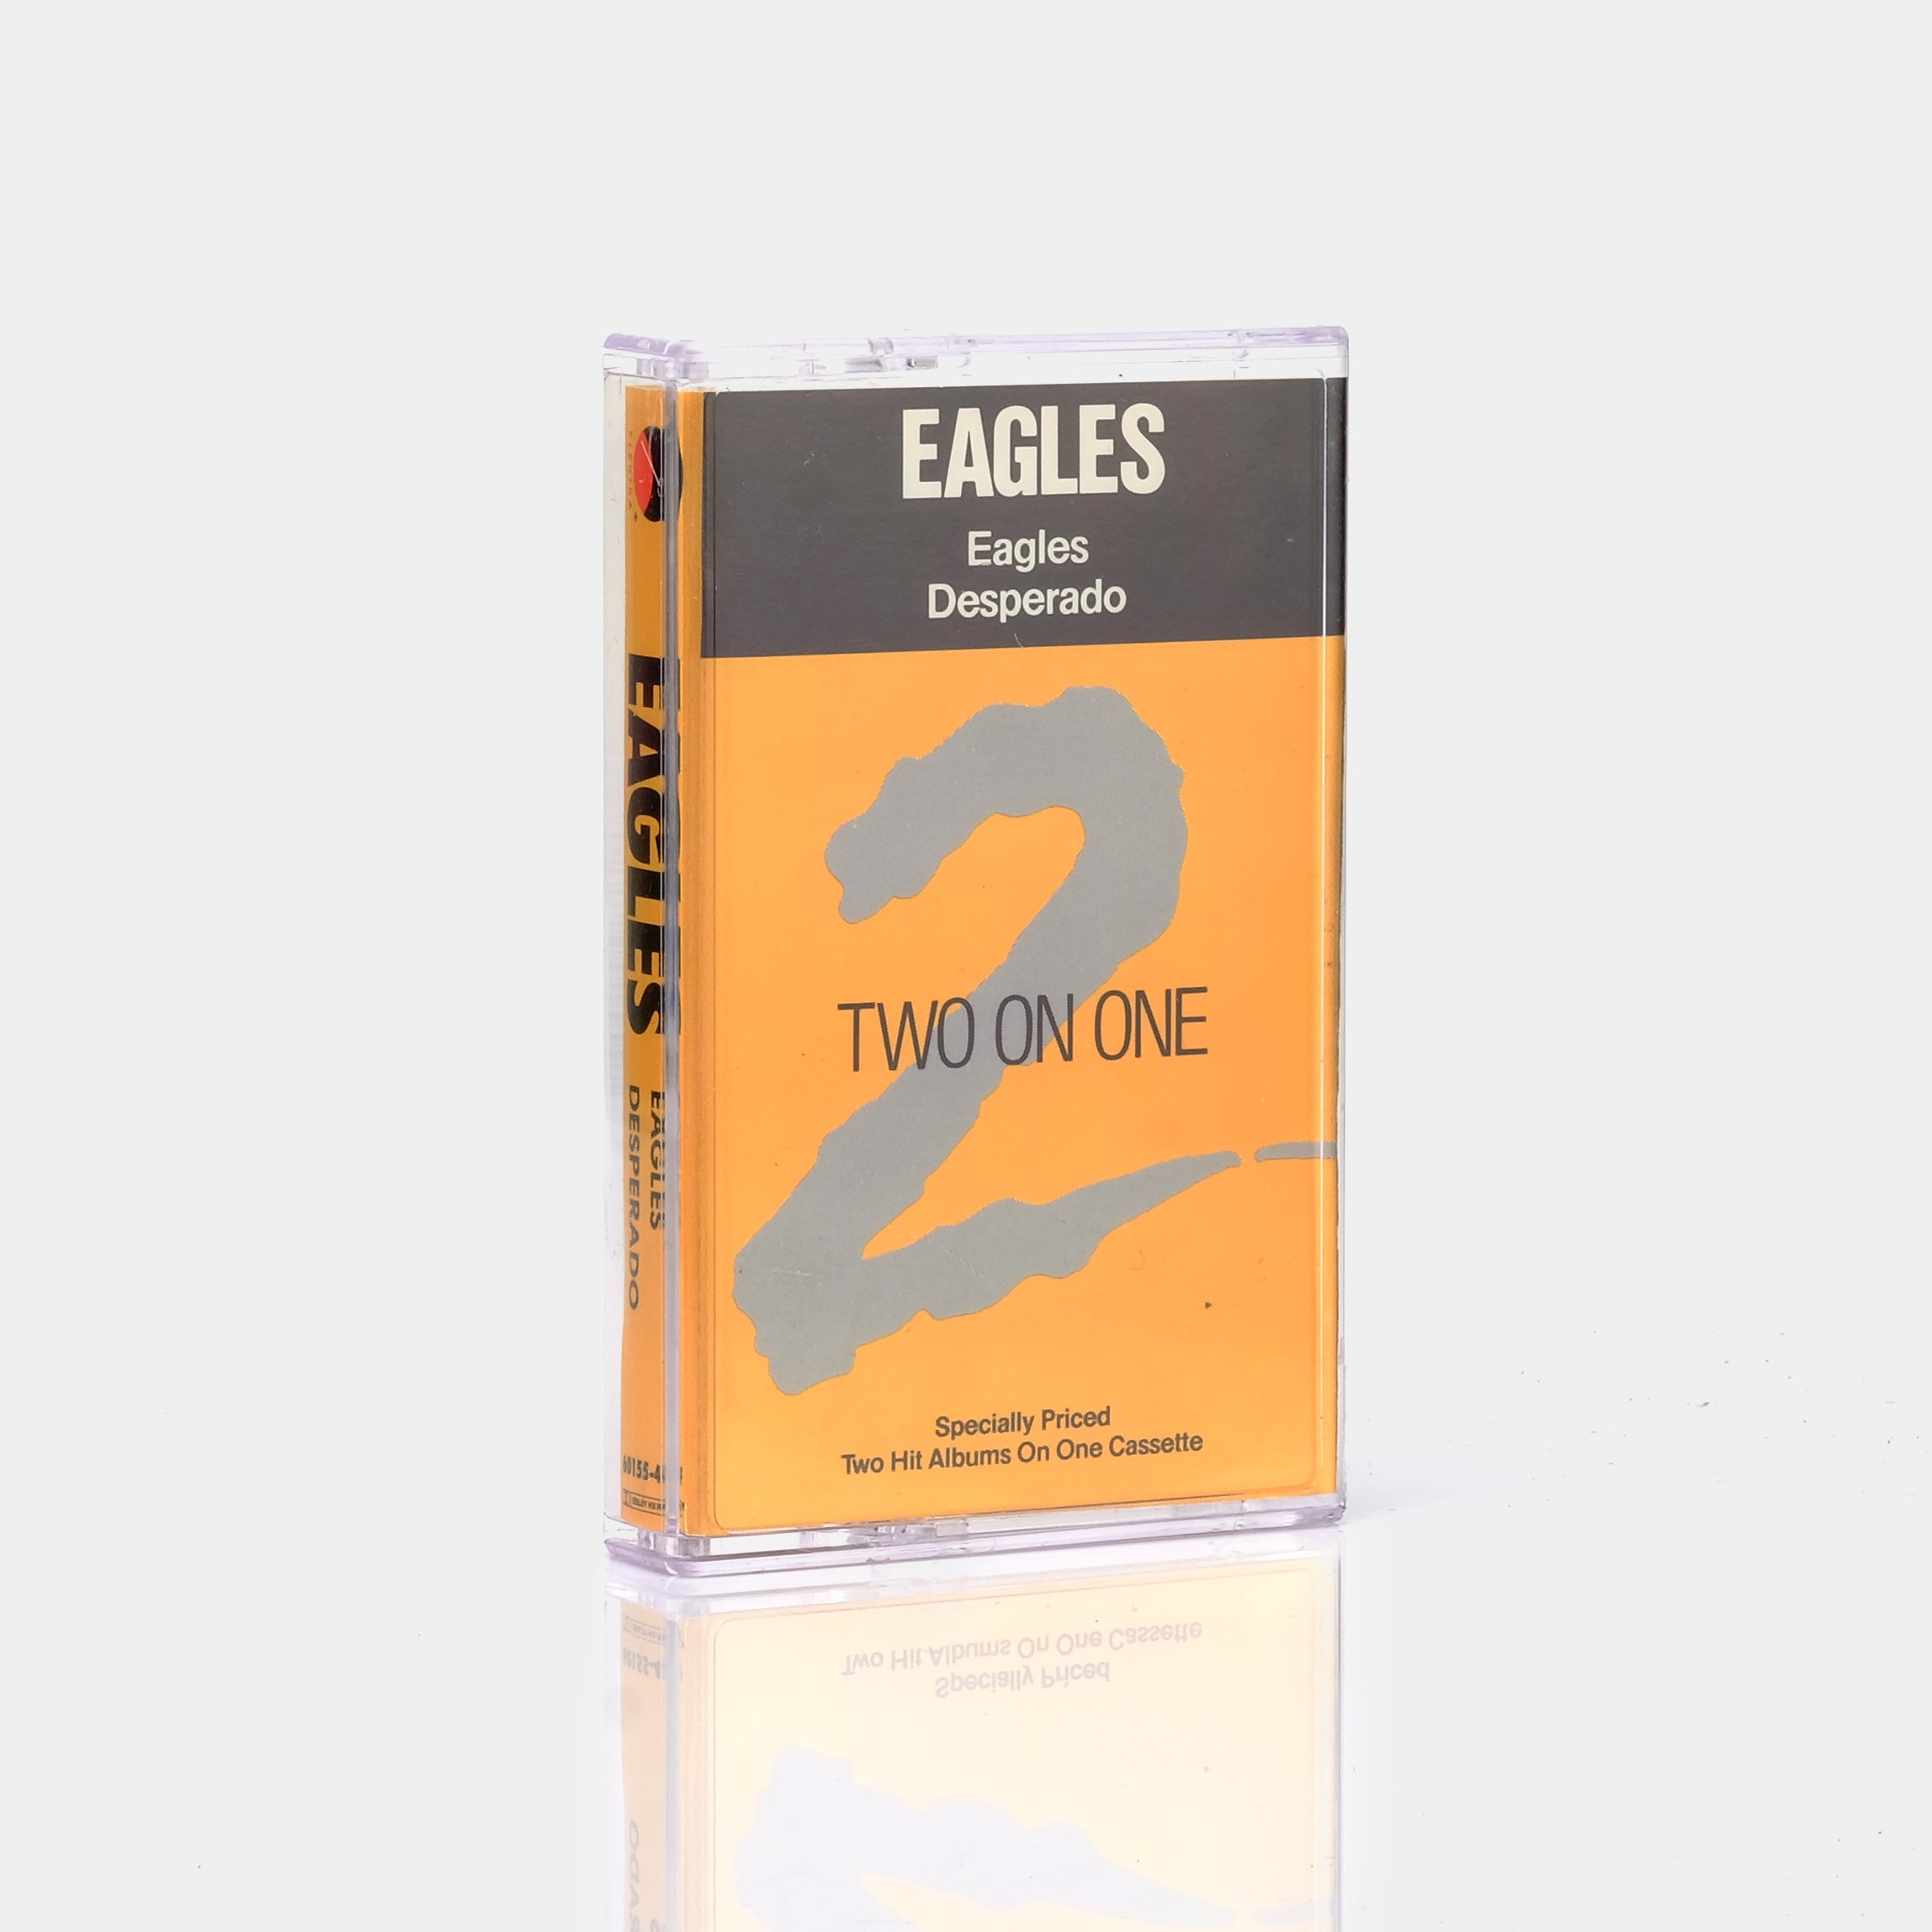 Eagles - Eagles / Desperado - Two On One Cassette Tape